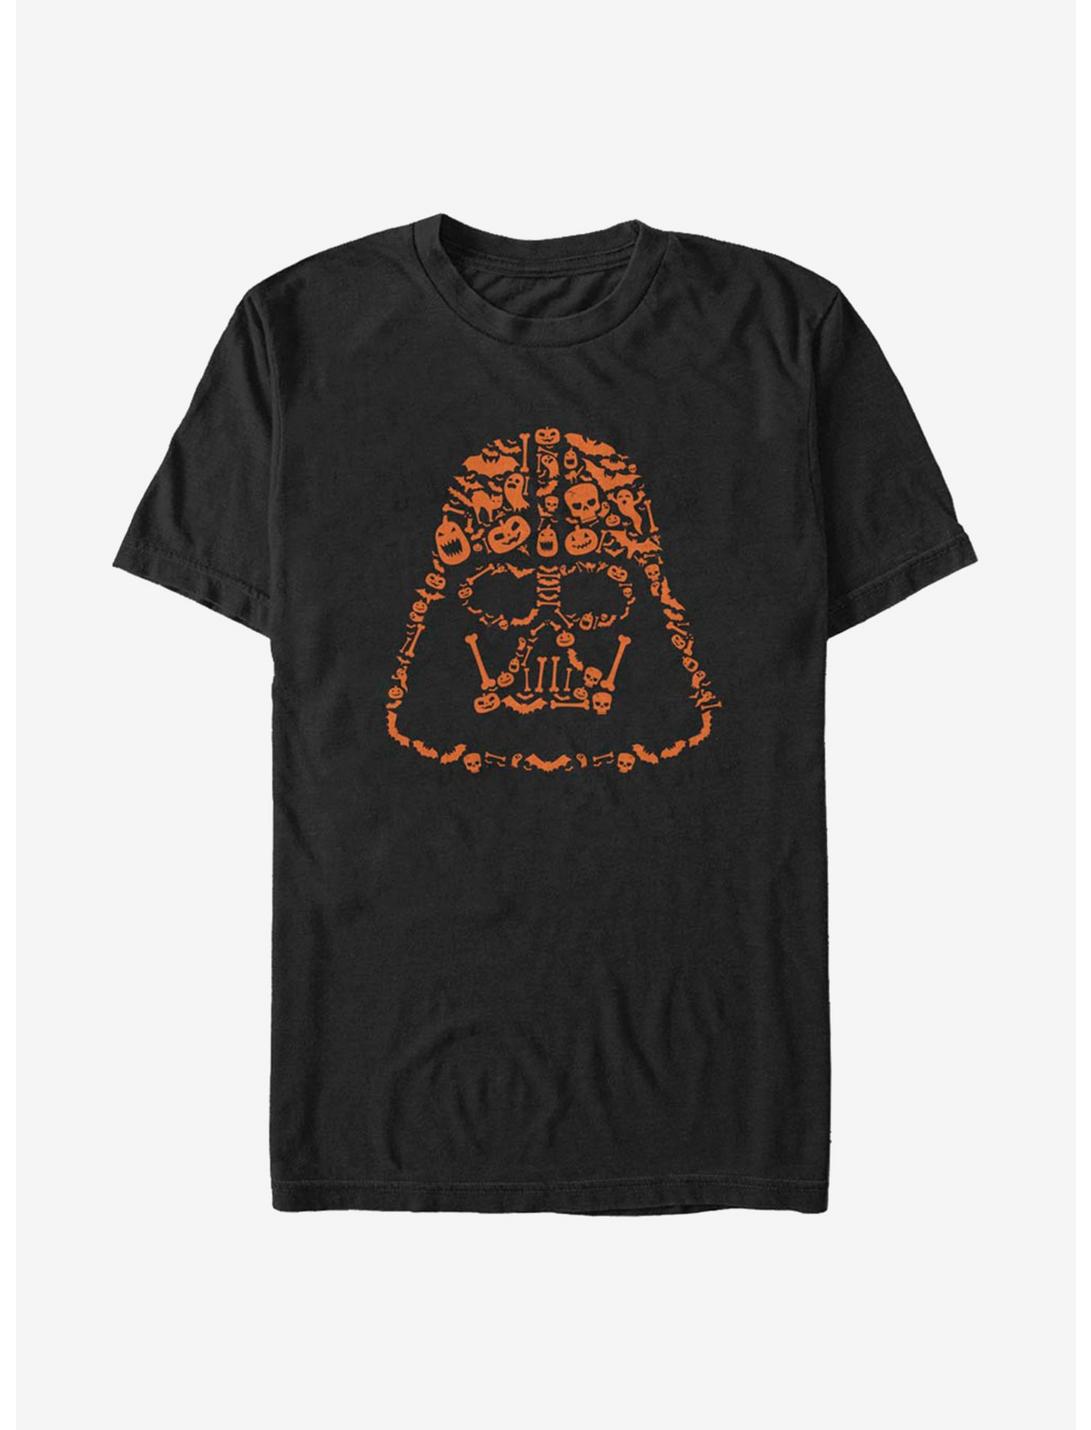 Star Wars Darth Vader Jackolanterns T-Shirt, BLACK, hi-res